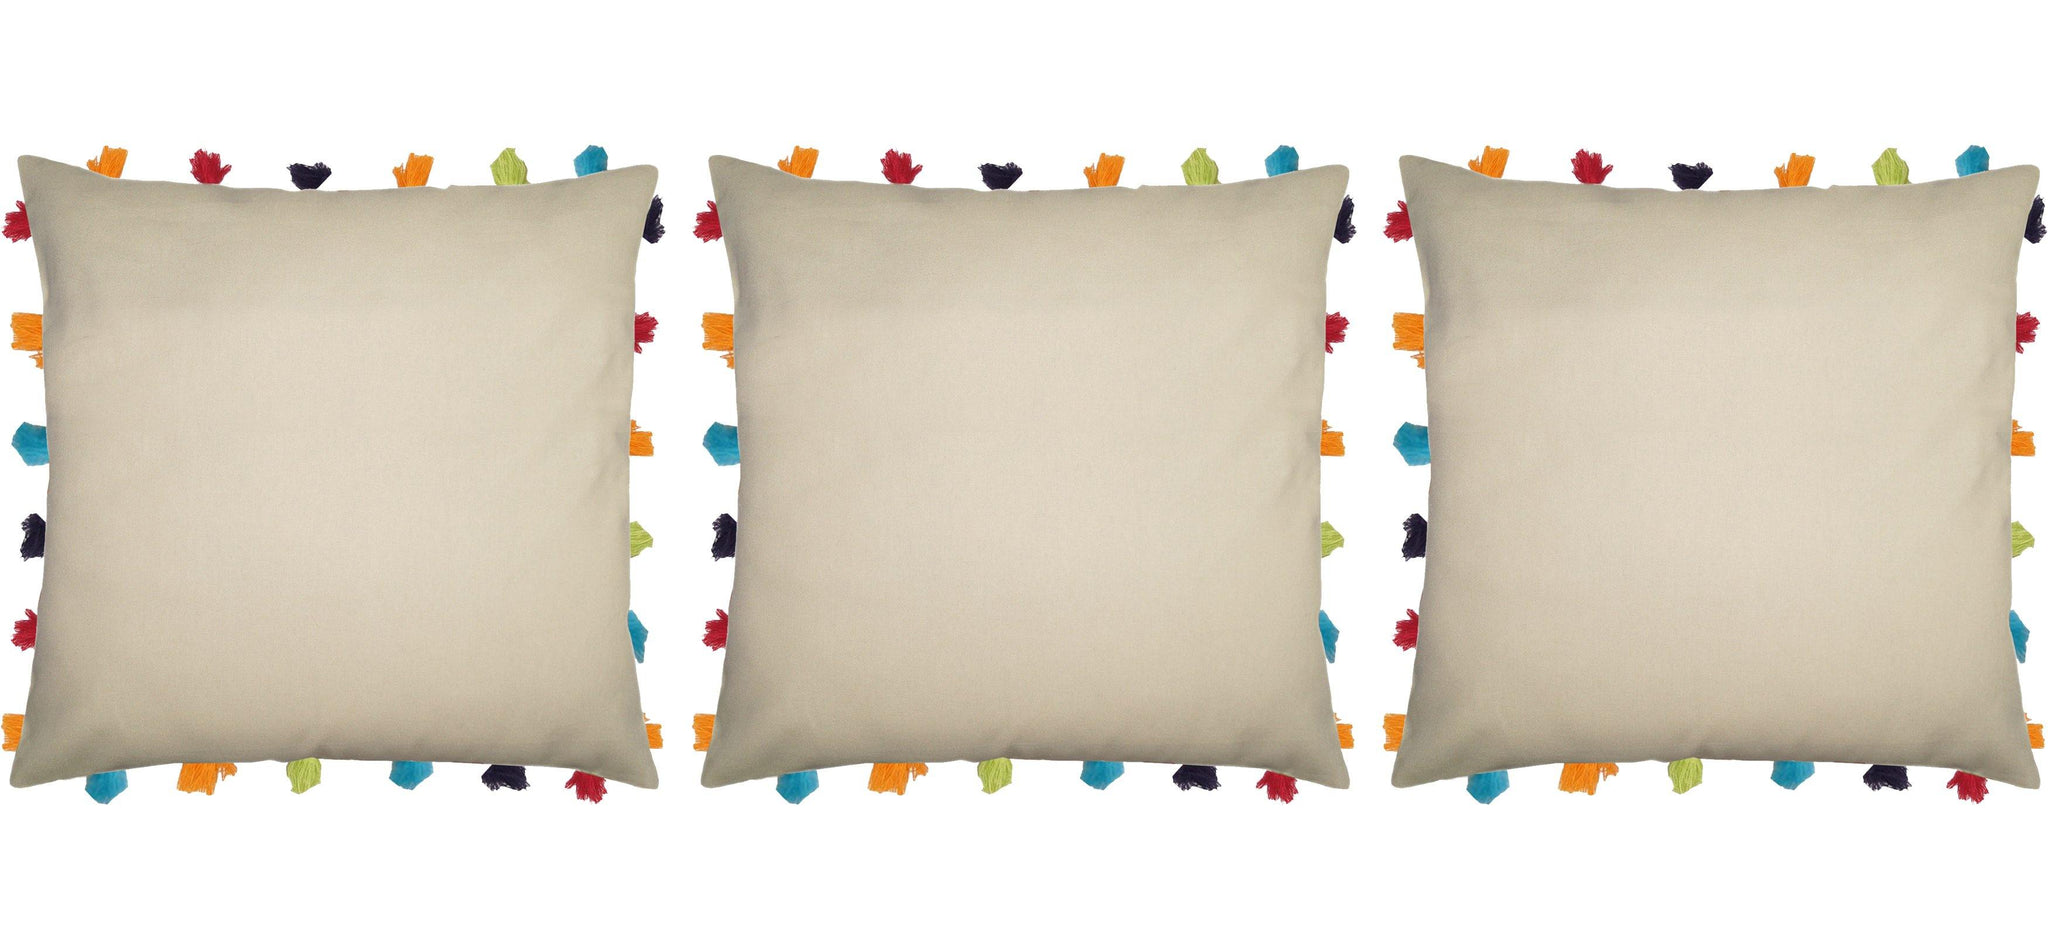 Lushomes Ecru Cushion Cover with Colorful tassels (3 pcs, 18 x 18”) - Lushomes